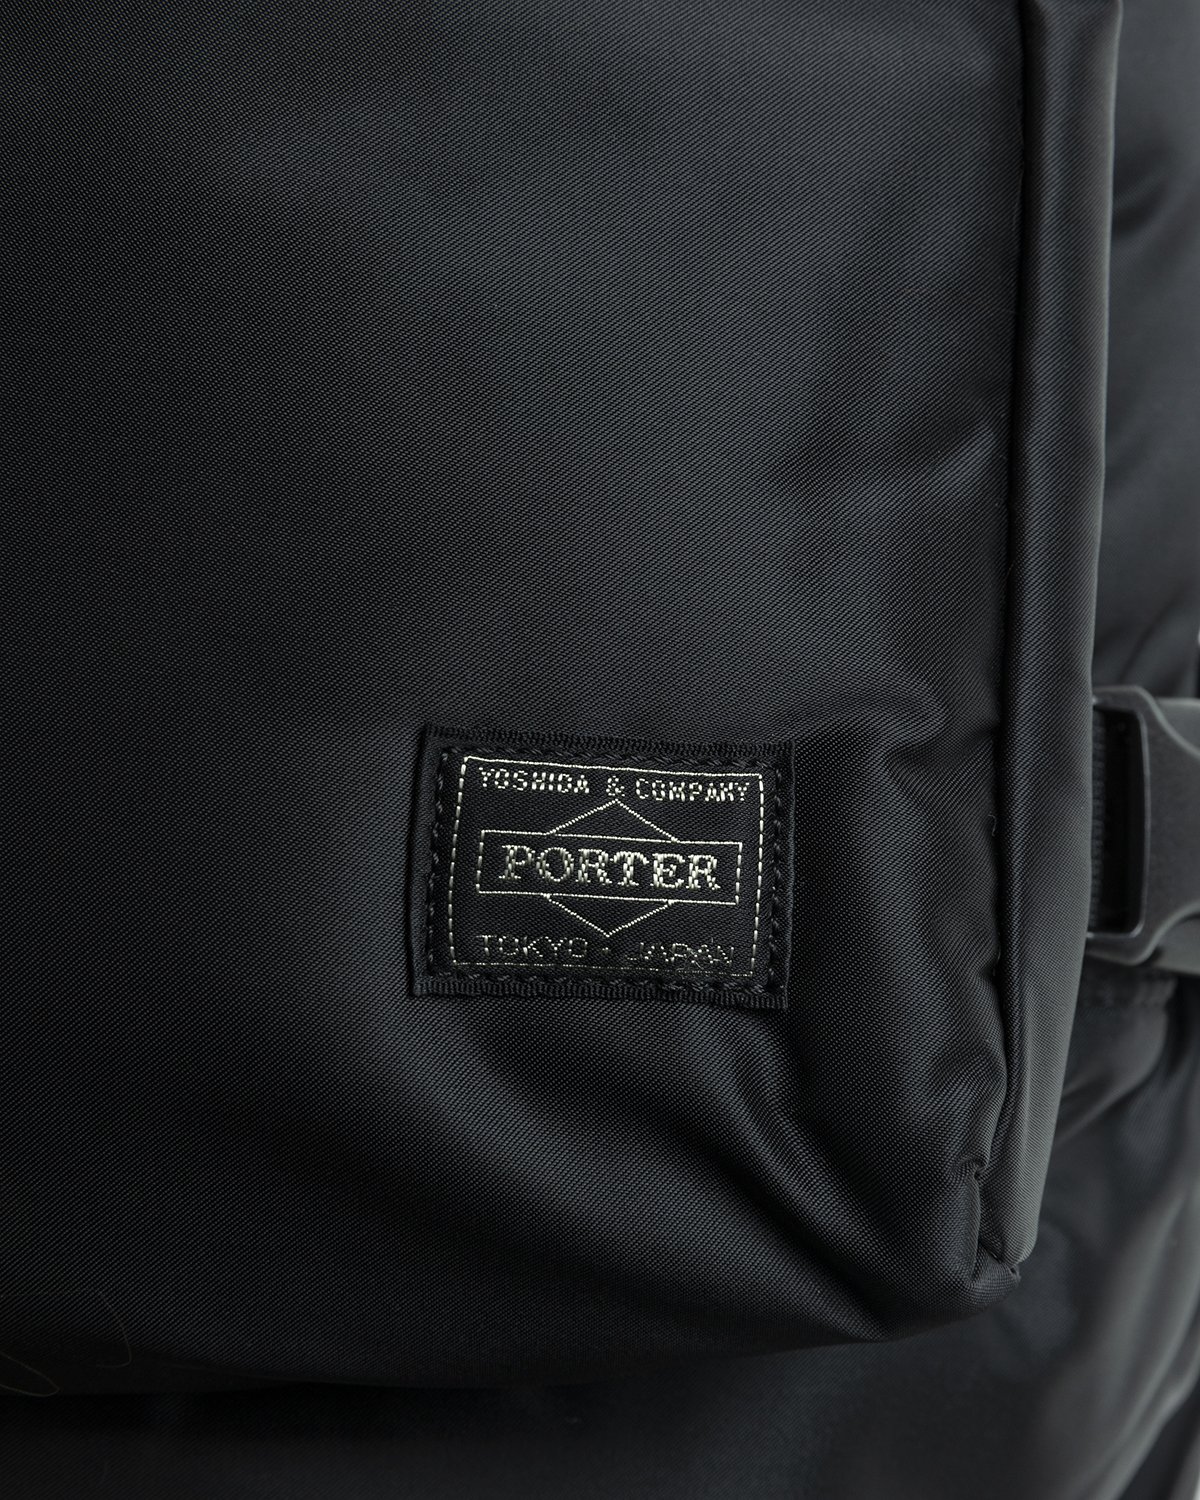 Porter-Yoshida & Co. - Tanker Padded Day Pack Black - Accessories - Black - Image 4